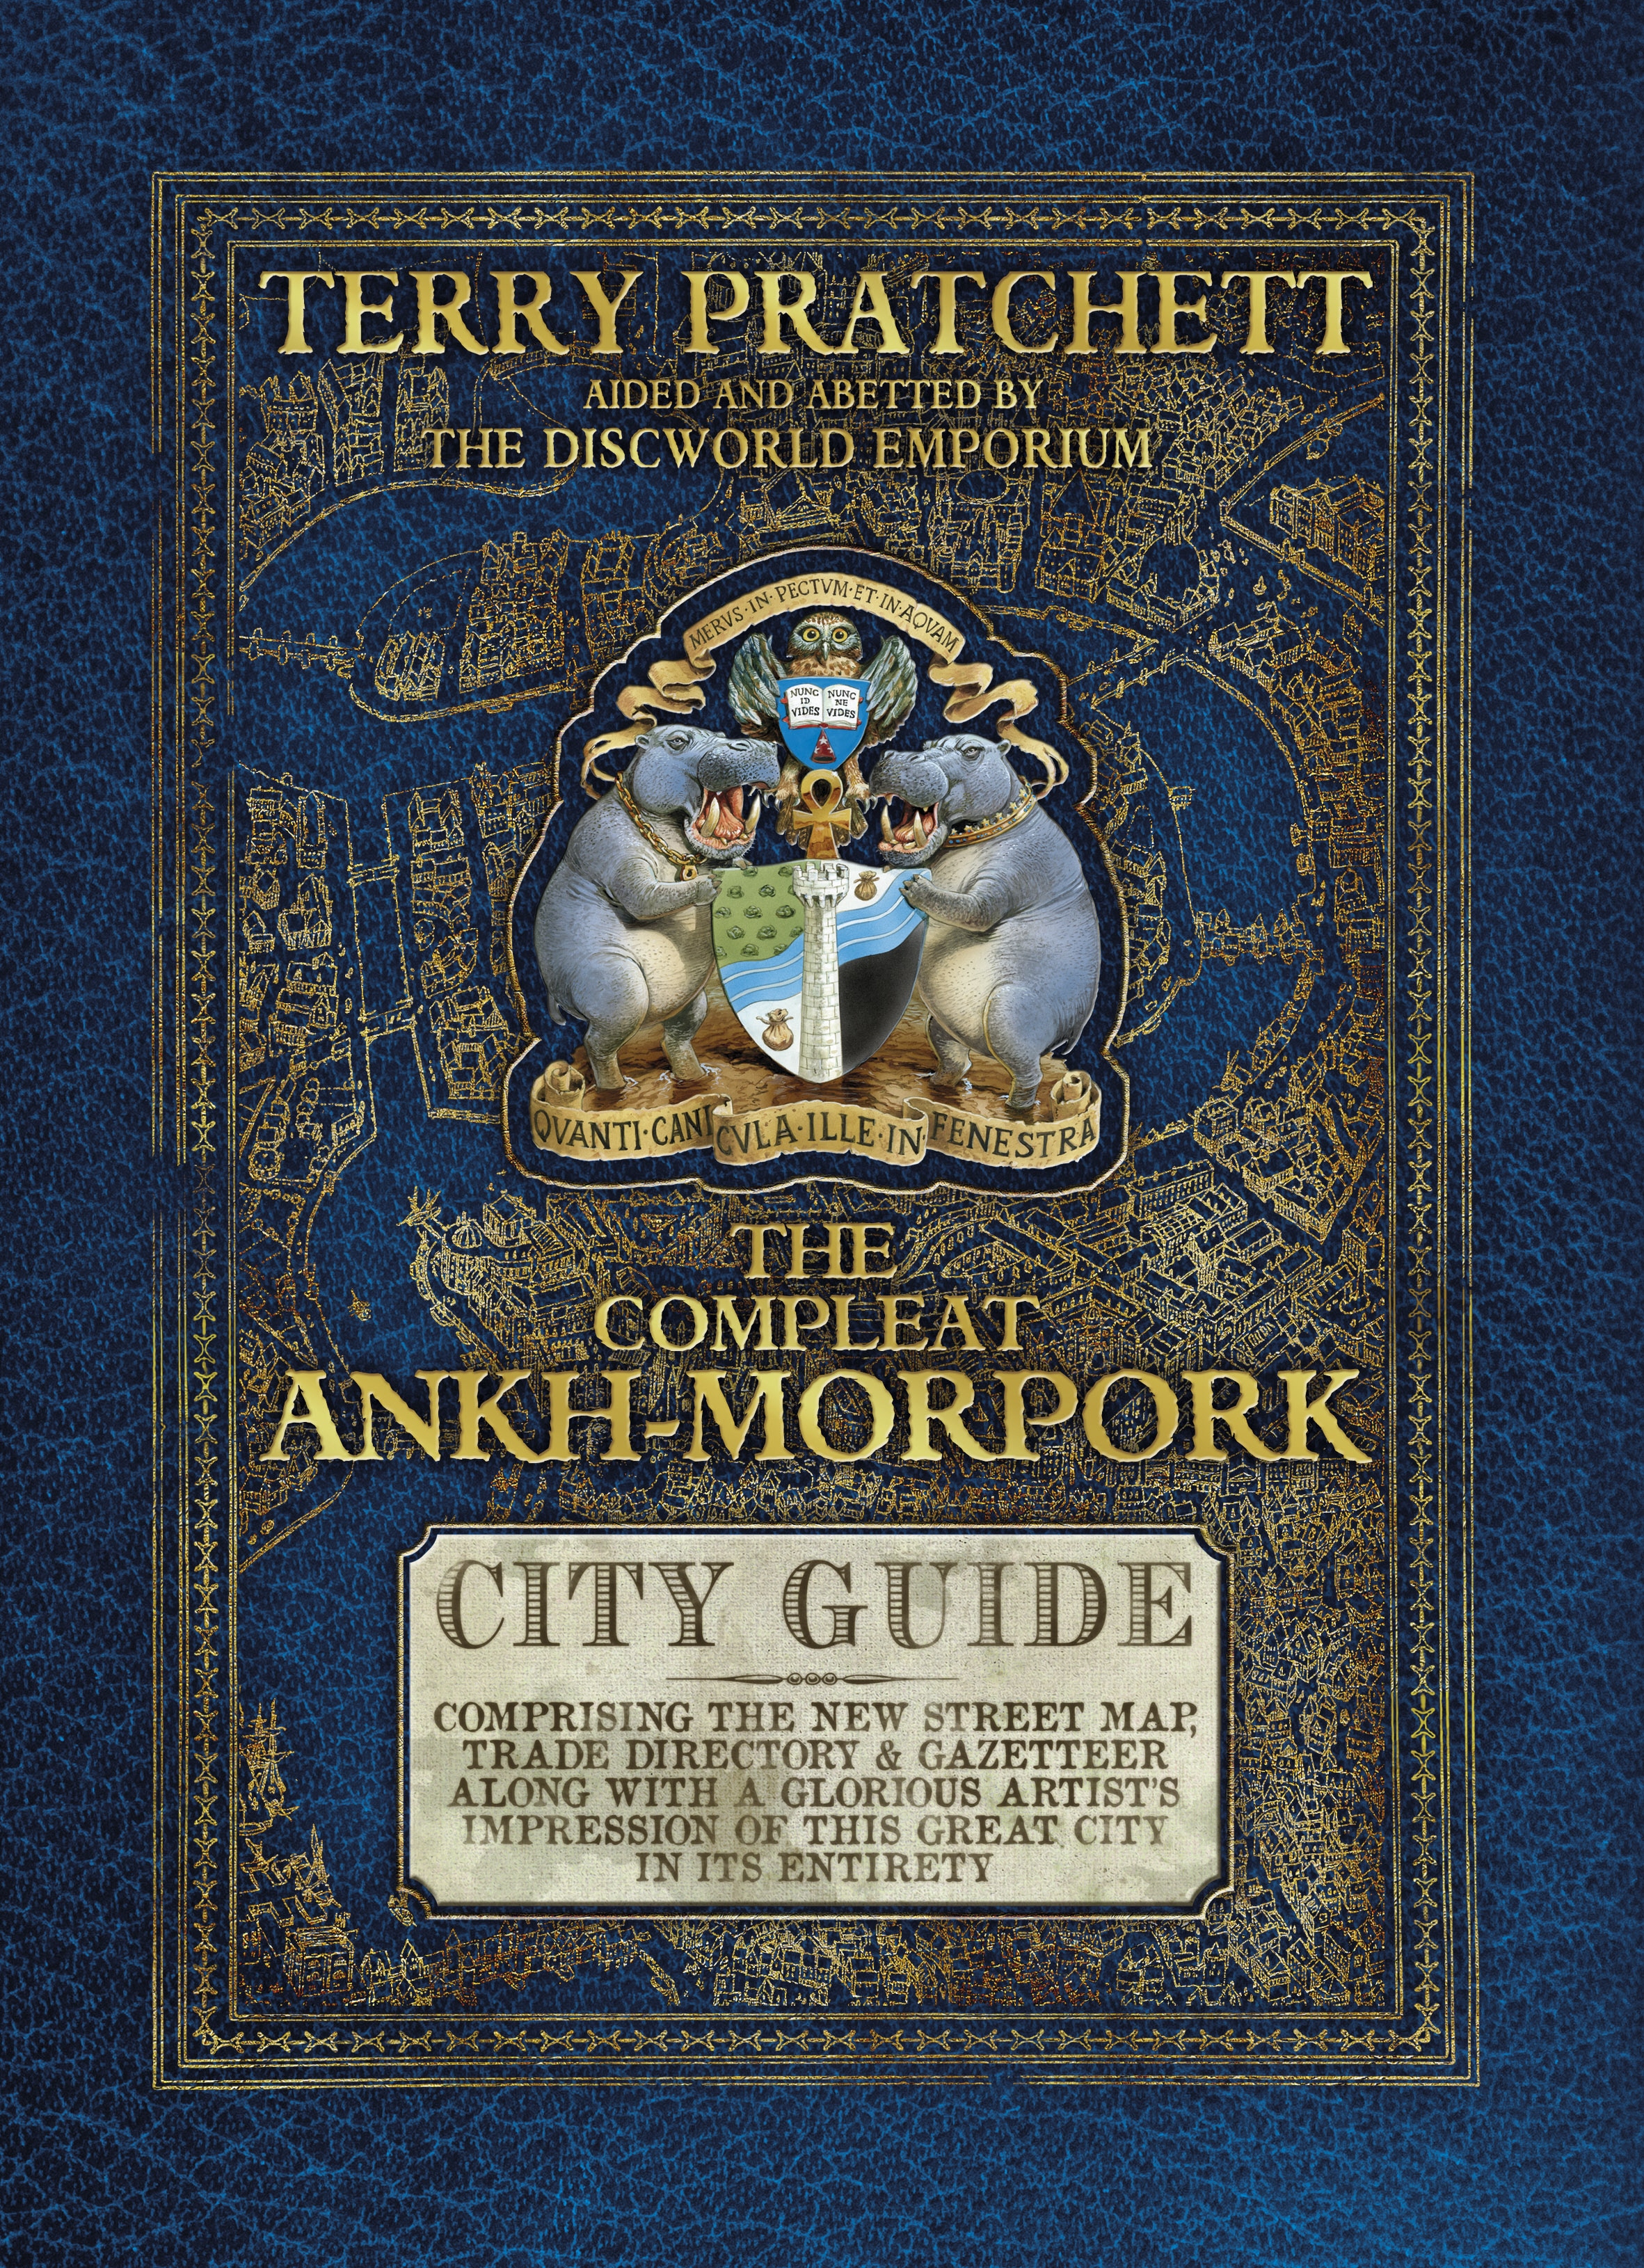 Book “The Compleat Ankh-Morpork” by Terry Pratchett — November 8, 2012